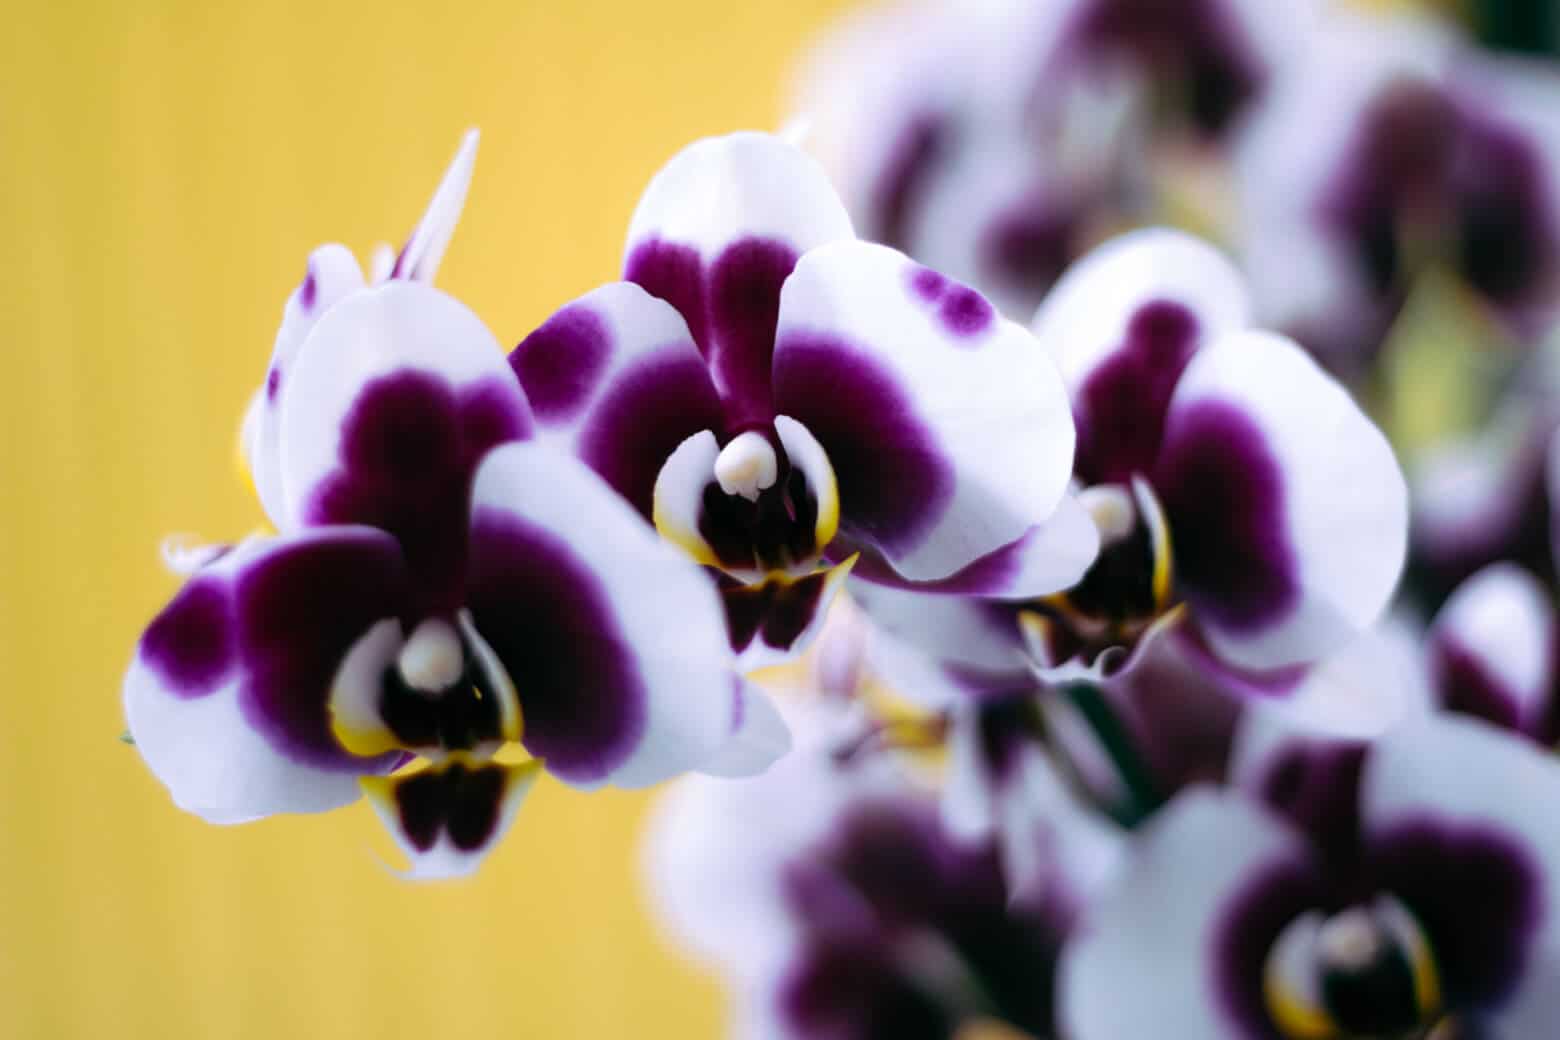 Orchids at Keukenhof